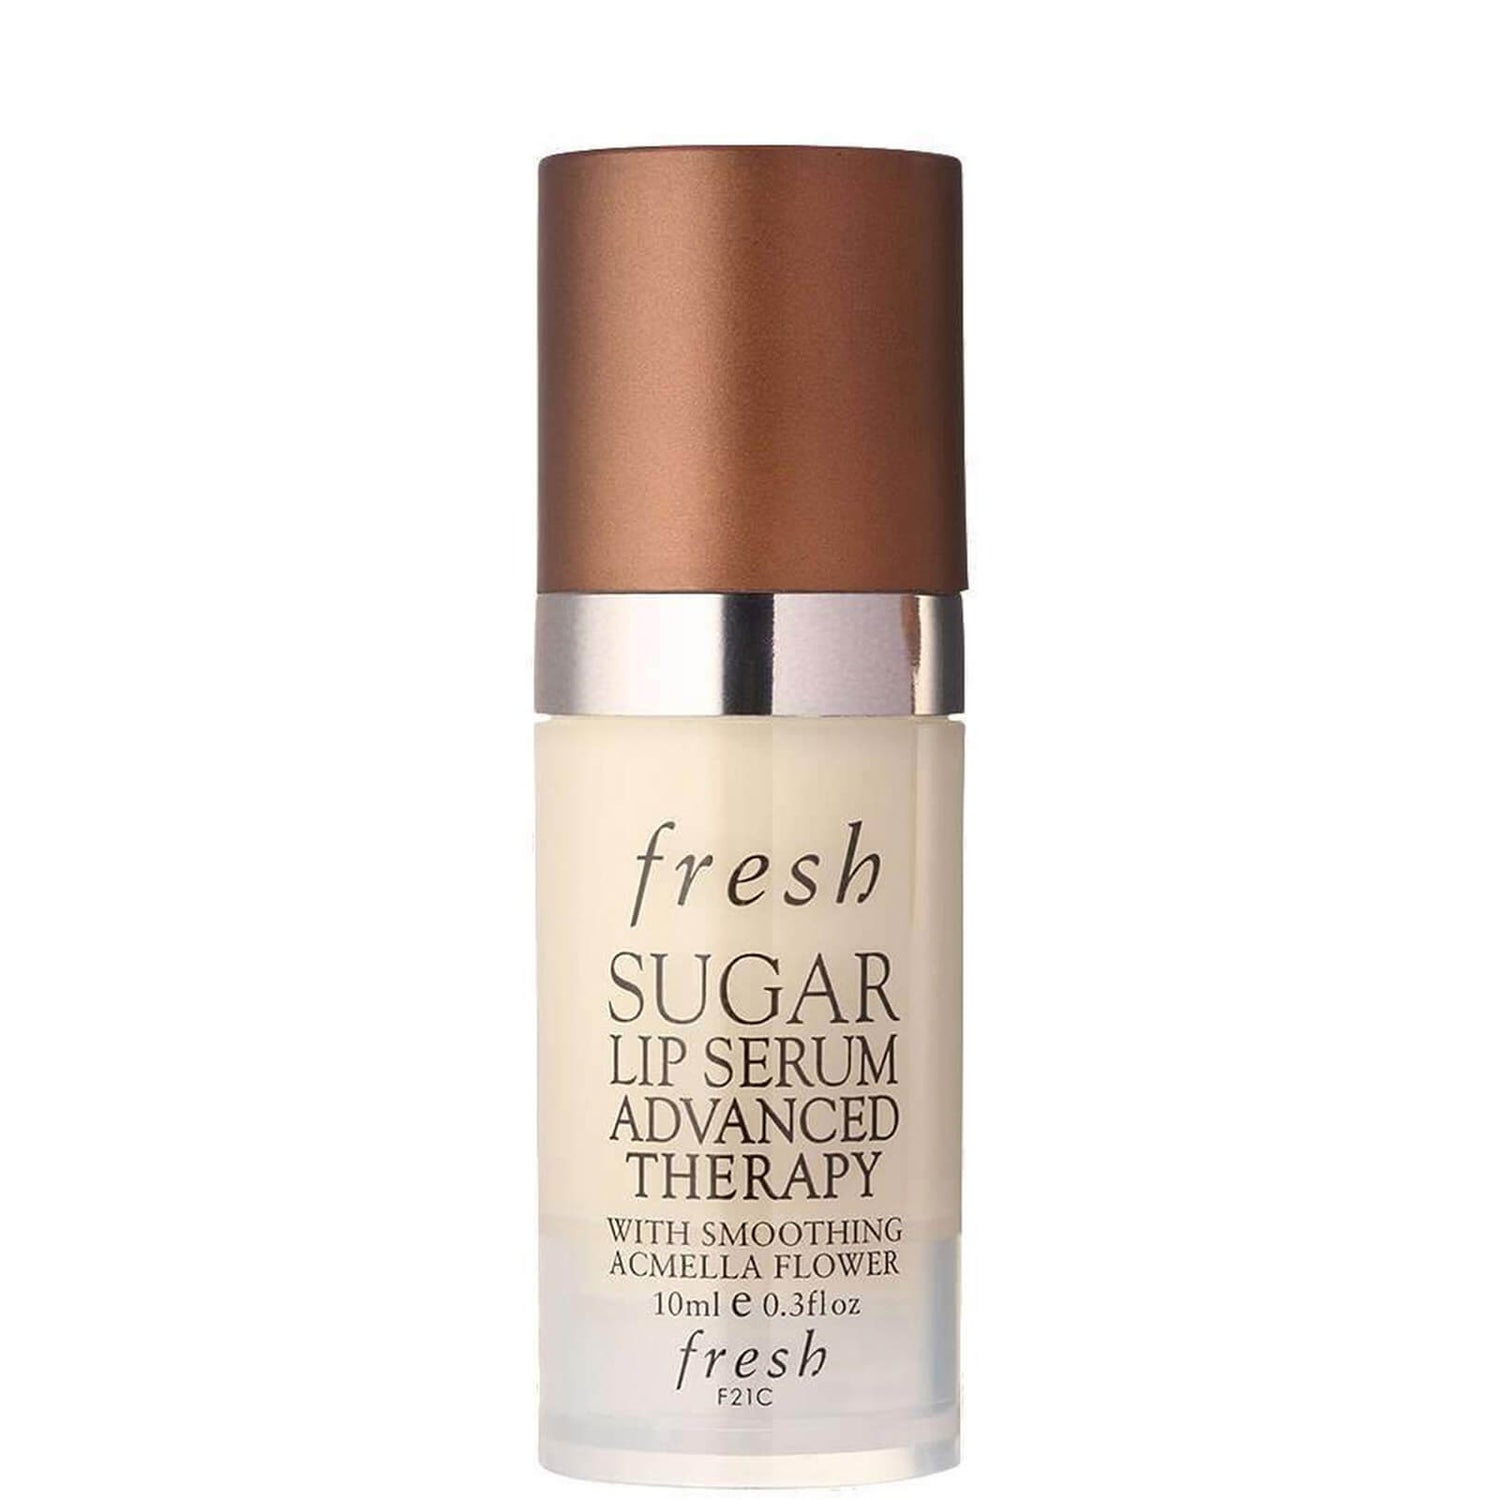 fresh Sugar Lip Serum Advanced Therapy